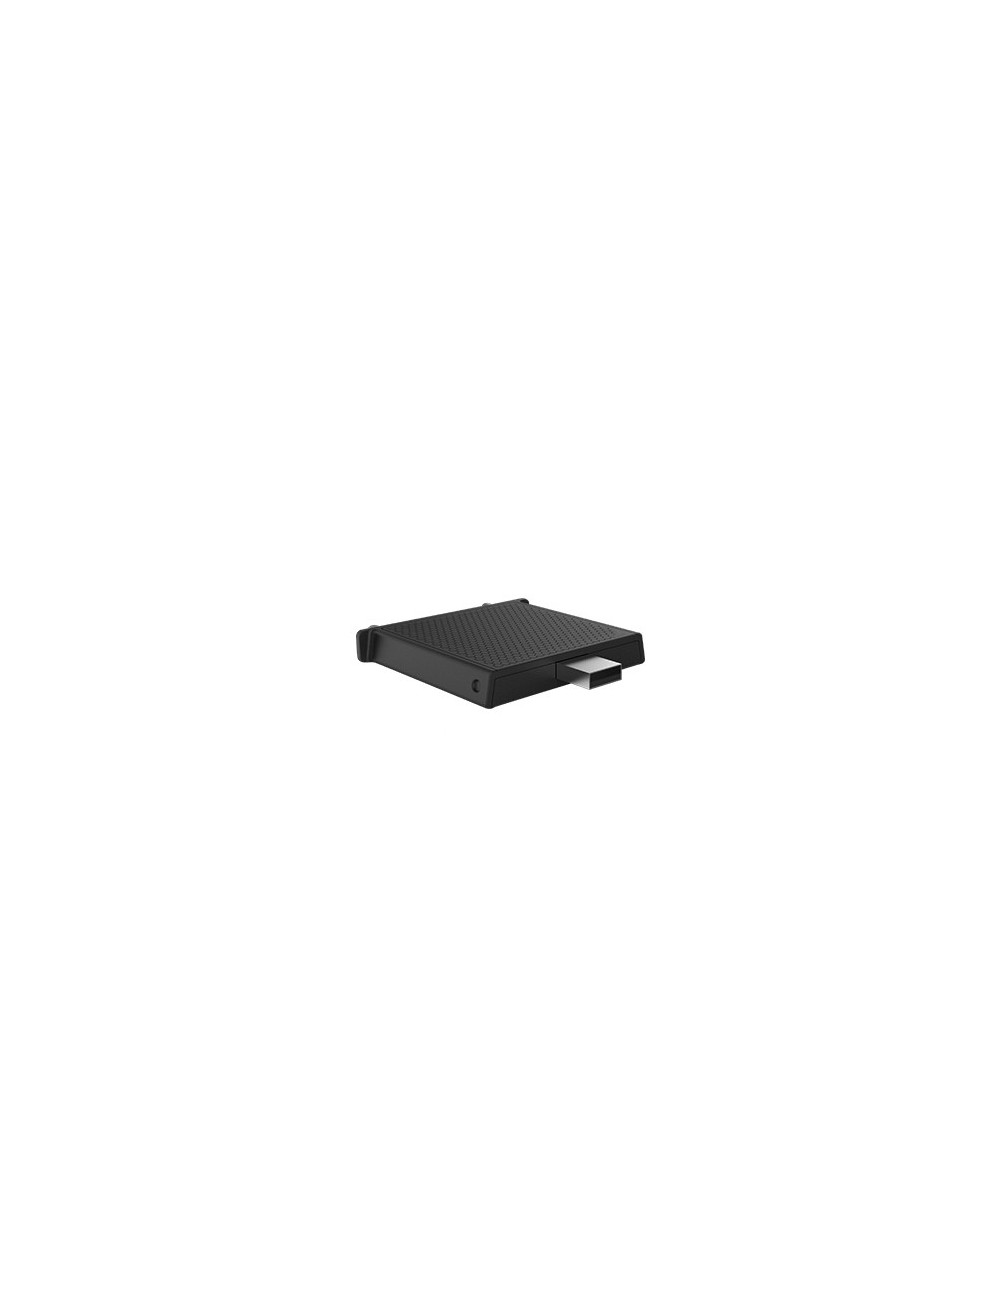 iiyama OWM001 scheda di rete e adattatore WLAN Bluetooth 433,5 Mbit s